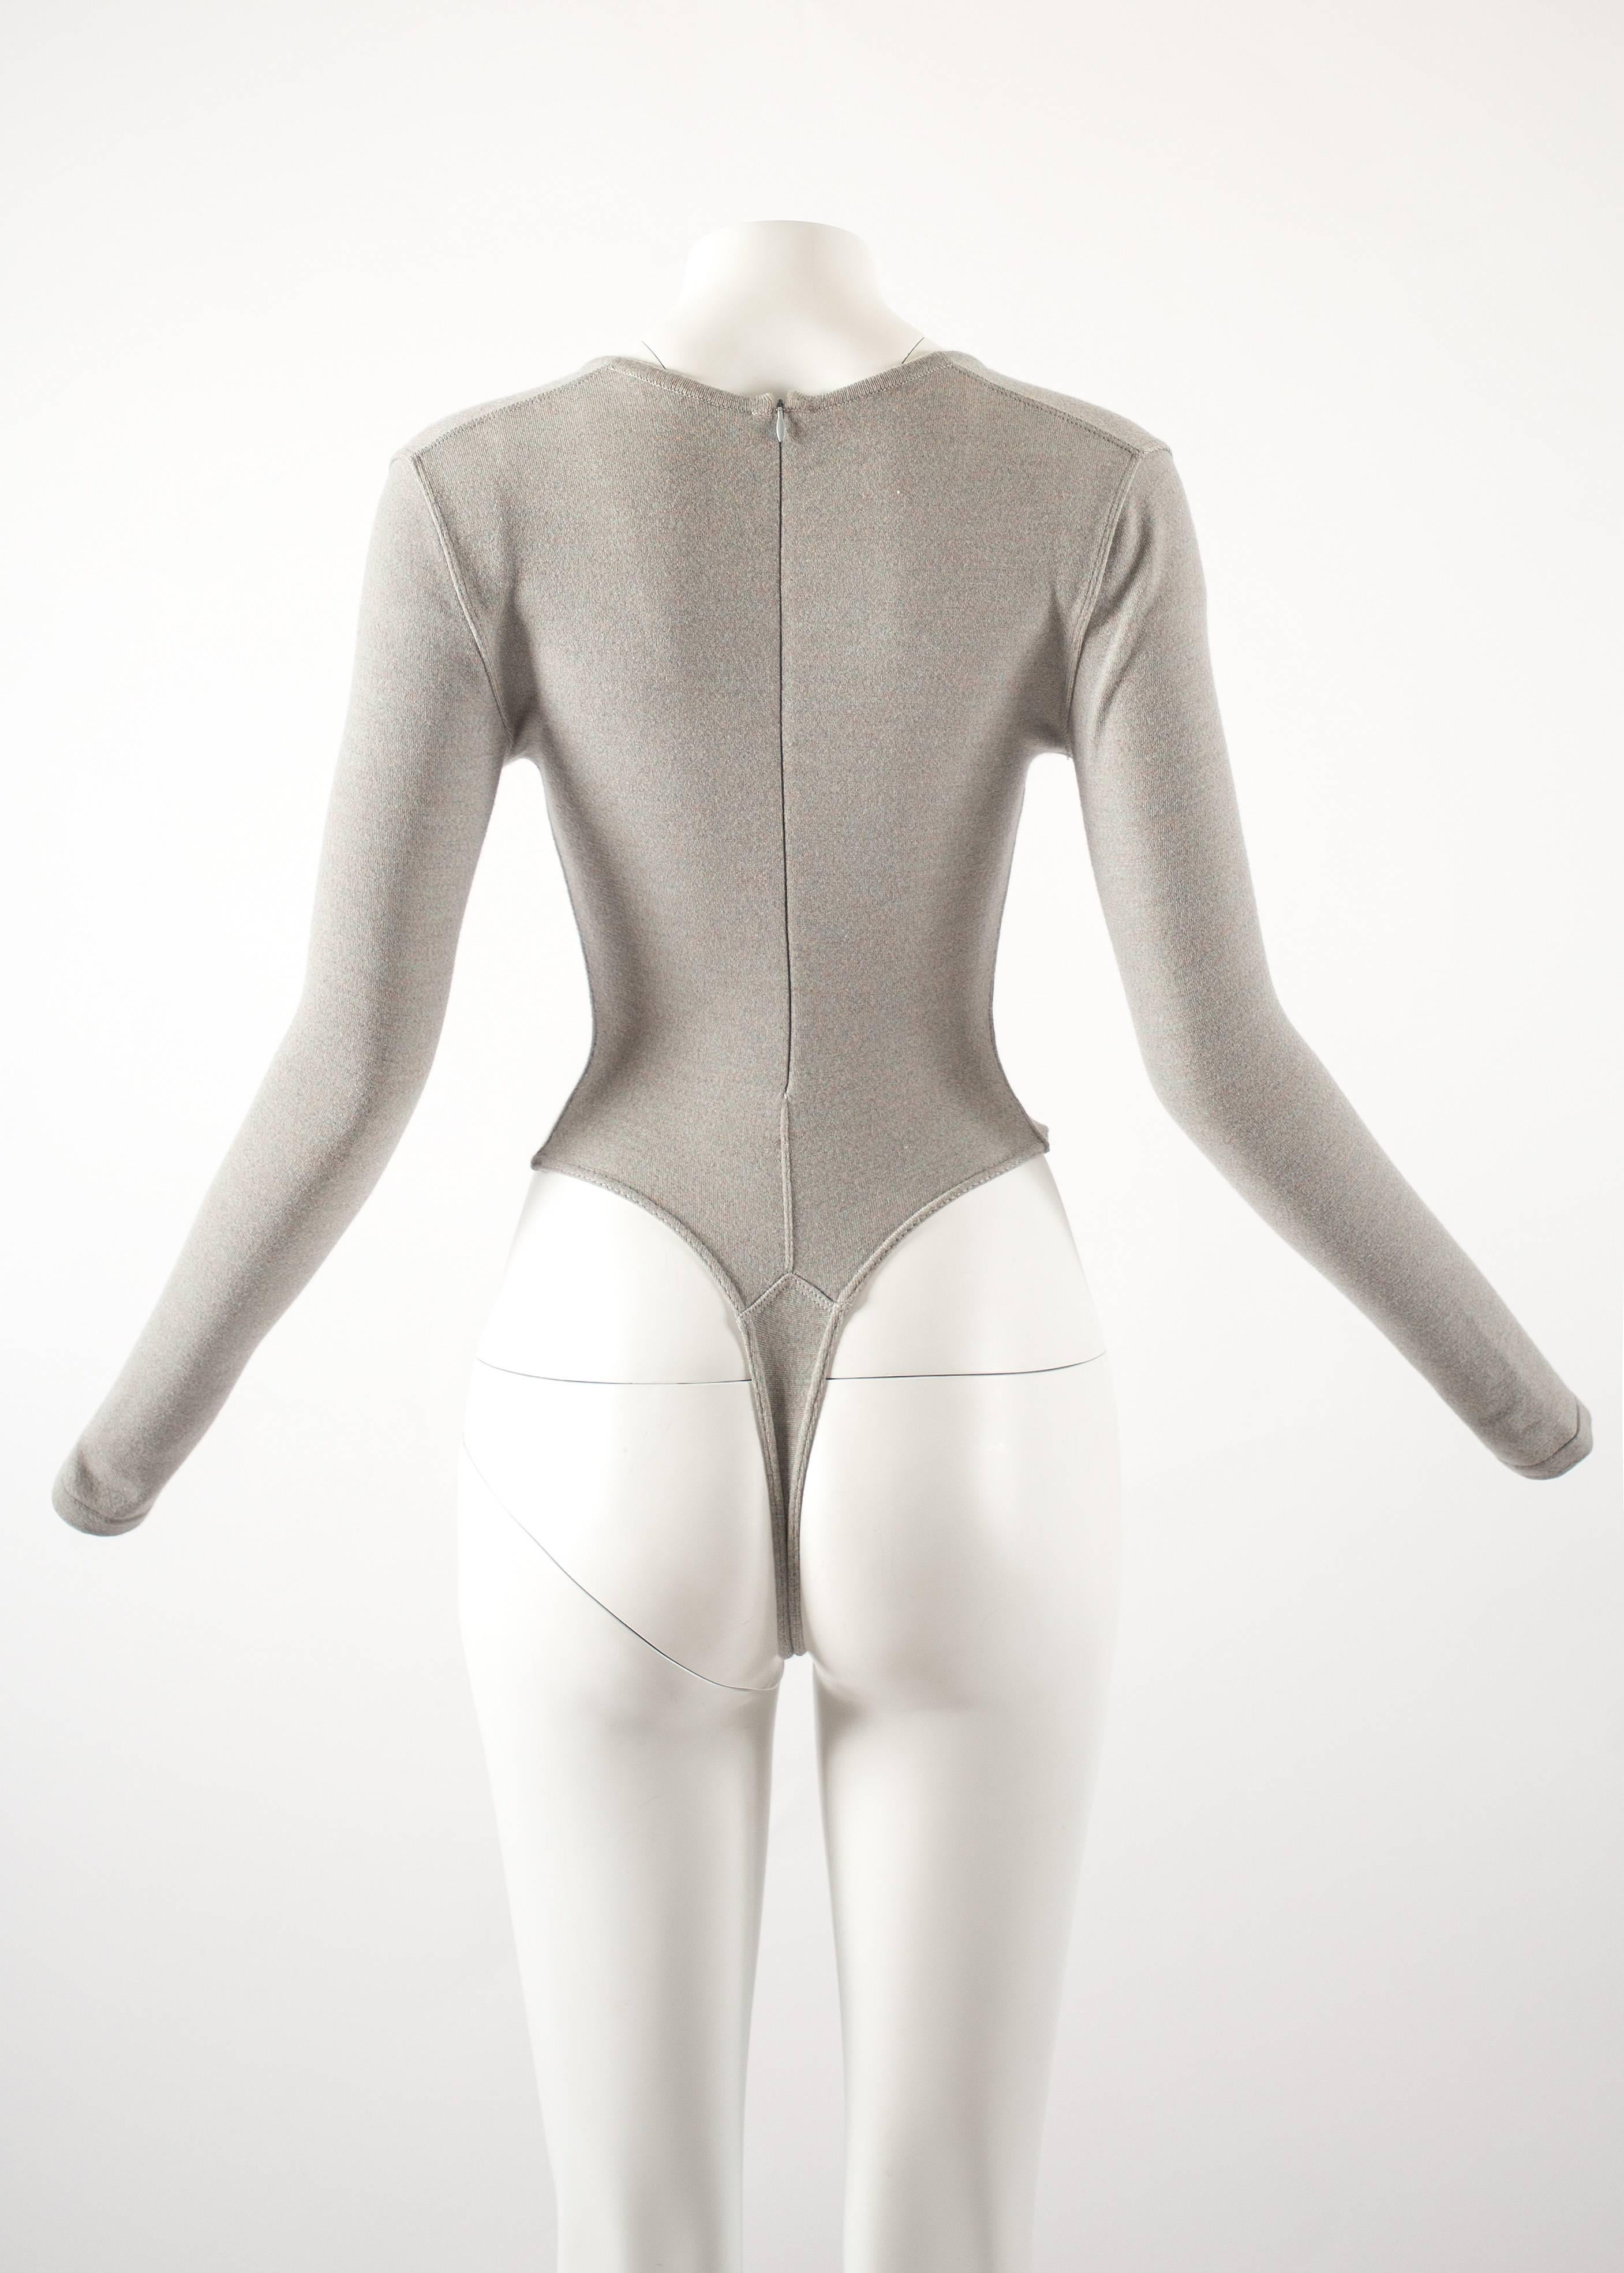 Alaia 1990s dove grey knitted bodysuit and mini skirt ensemble  2